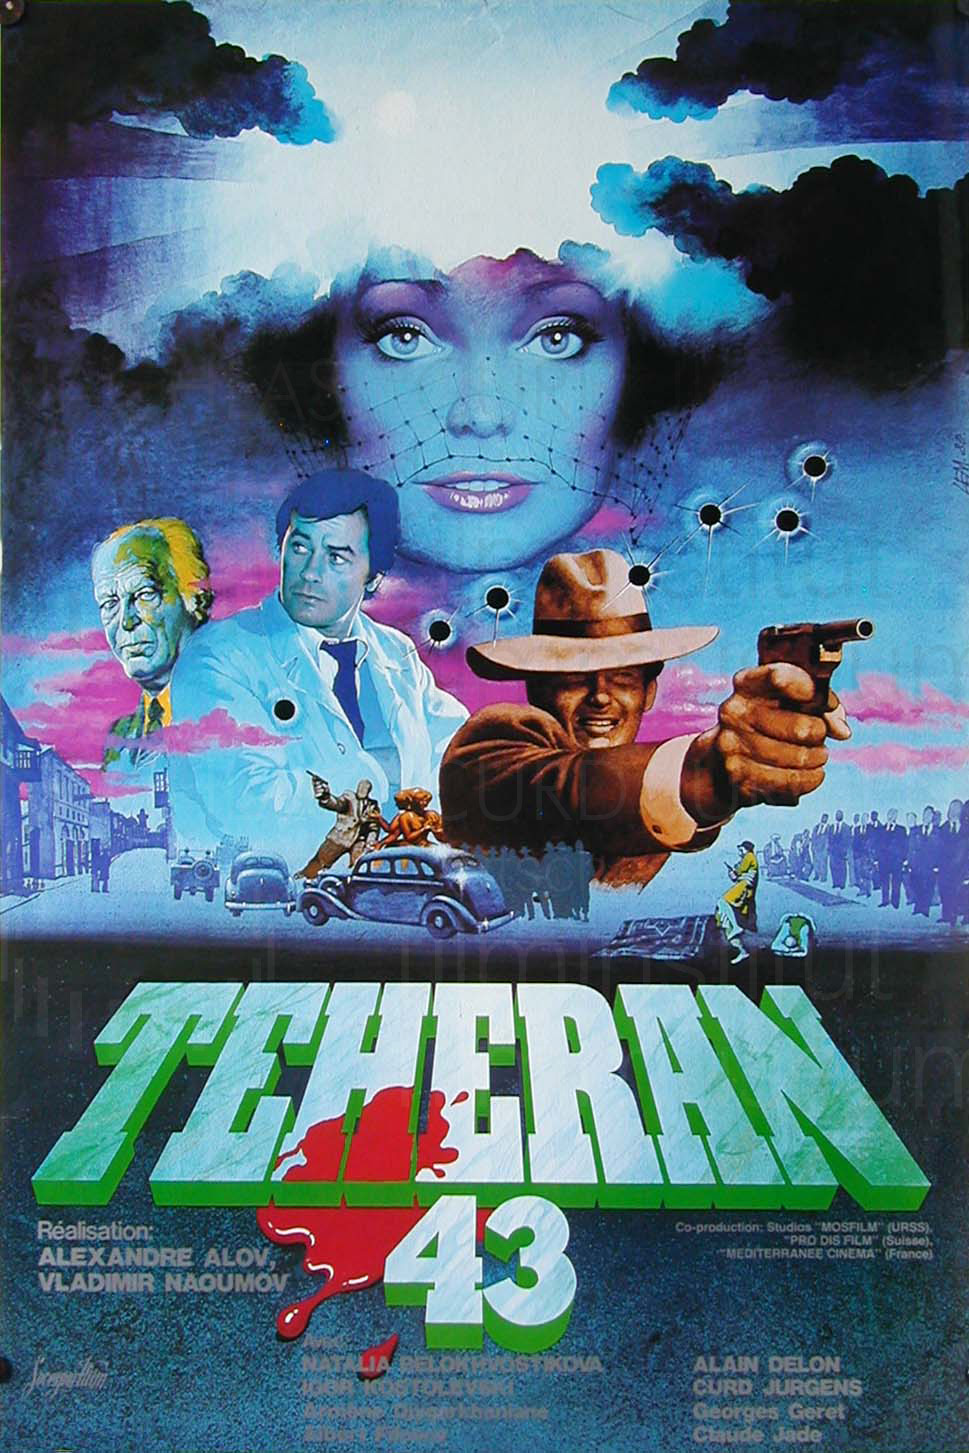 TEHERAN 43 (1981)